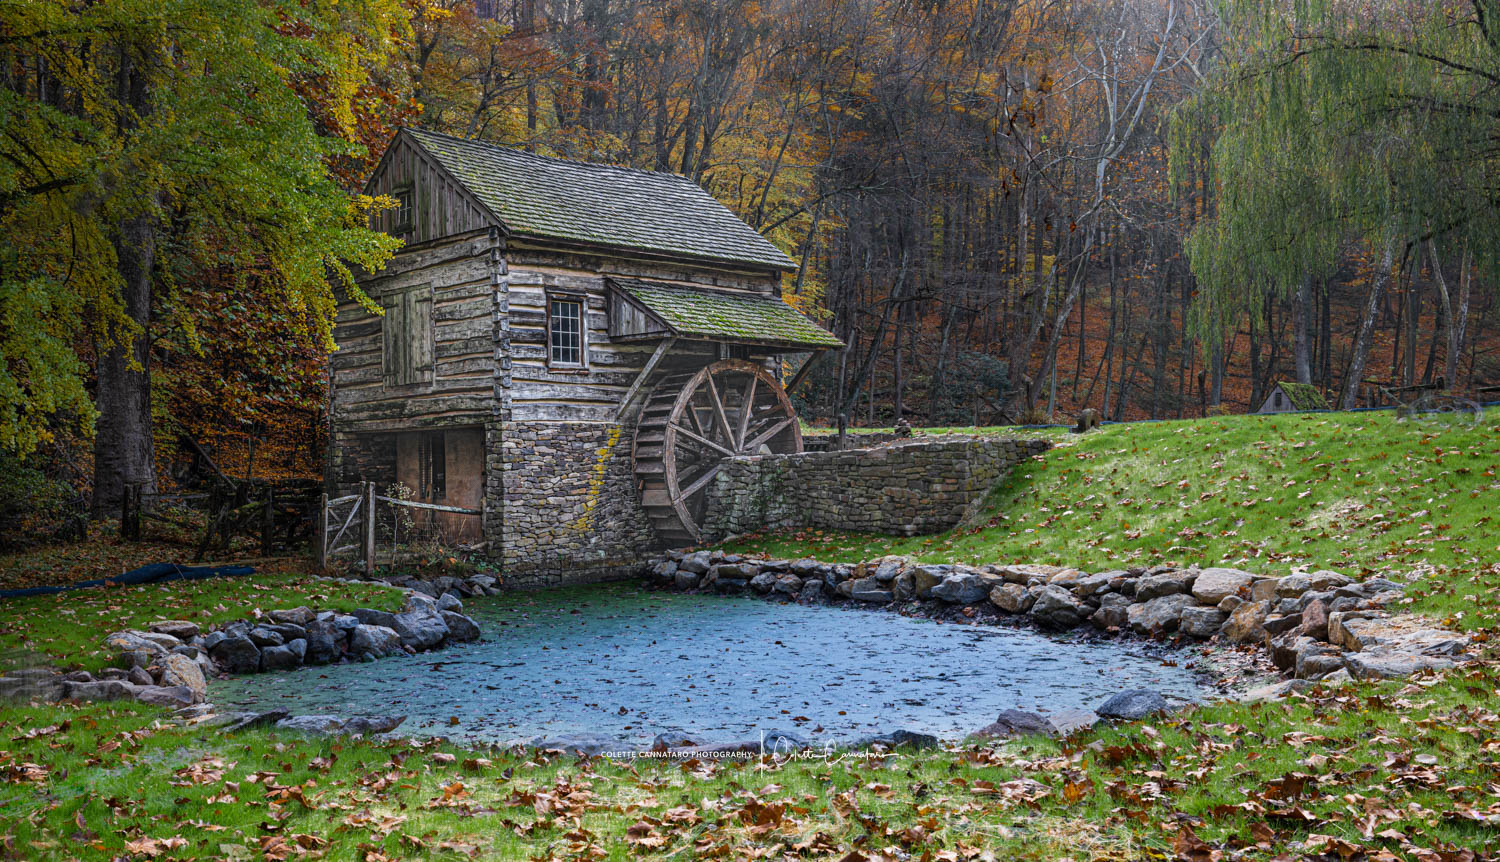 A beautiful watermill in Pennsylvania.